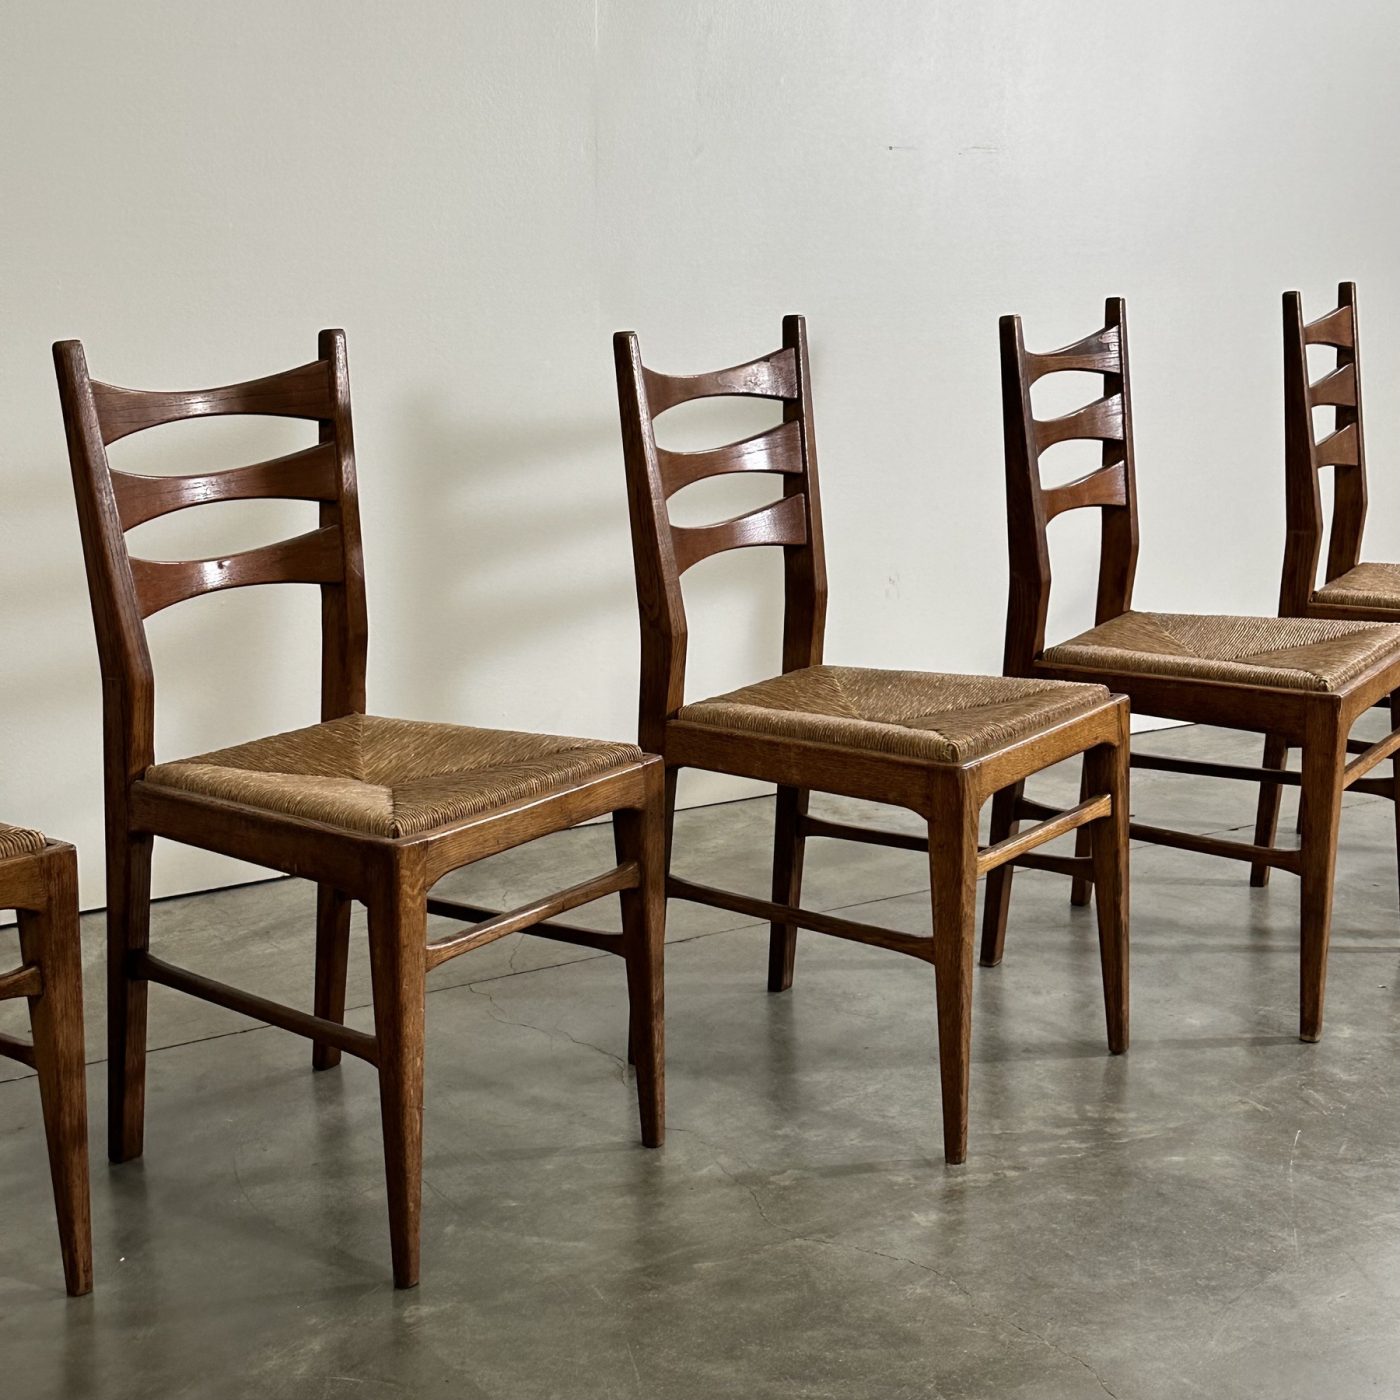 objet-vagabond-oak-chairs0001